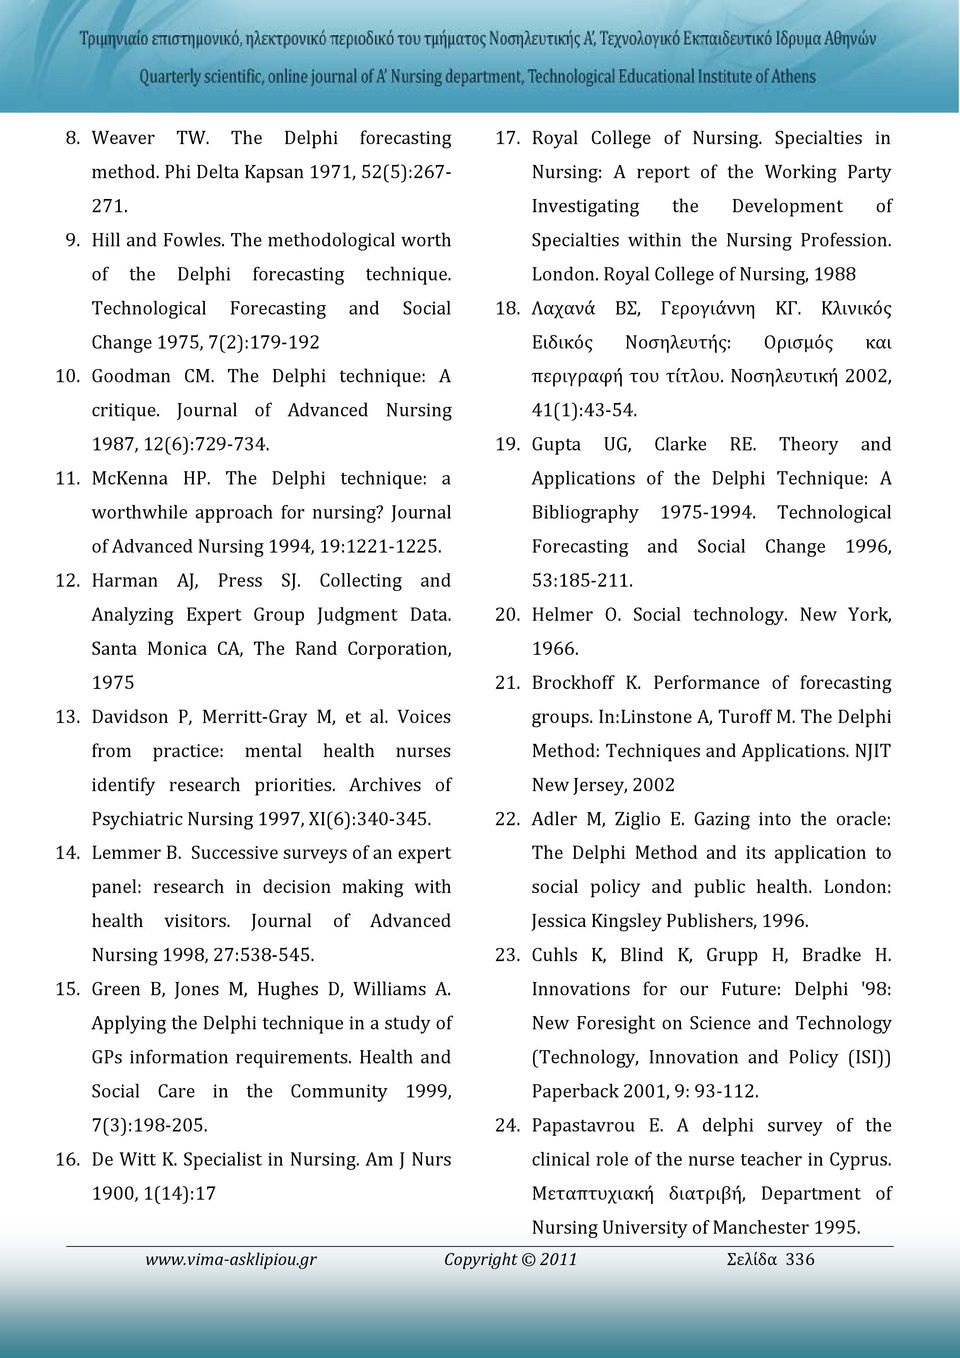 Royal College of Nursing, 1988 Technological Forecasting and Social 18. Λαχανά ΒΣ, Γερογιάννη ΚΓ. Κλινικός Change 1975, 7(2):179-192 Ειδικός Νοσηλευτής: Ορισμός και 10. Goodman CM.